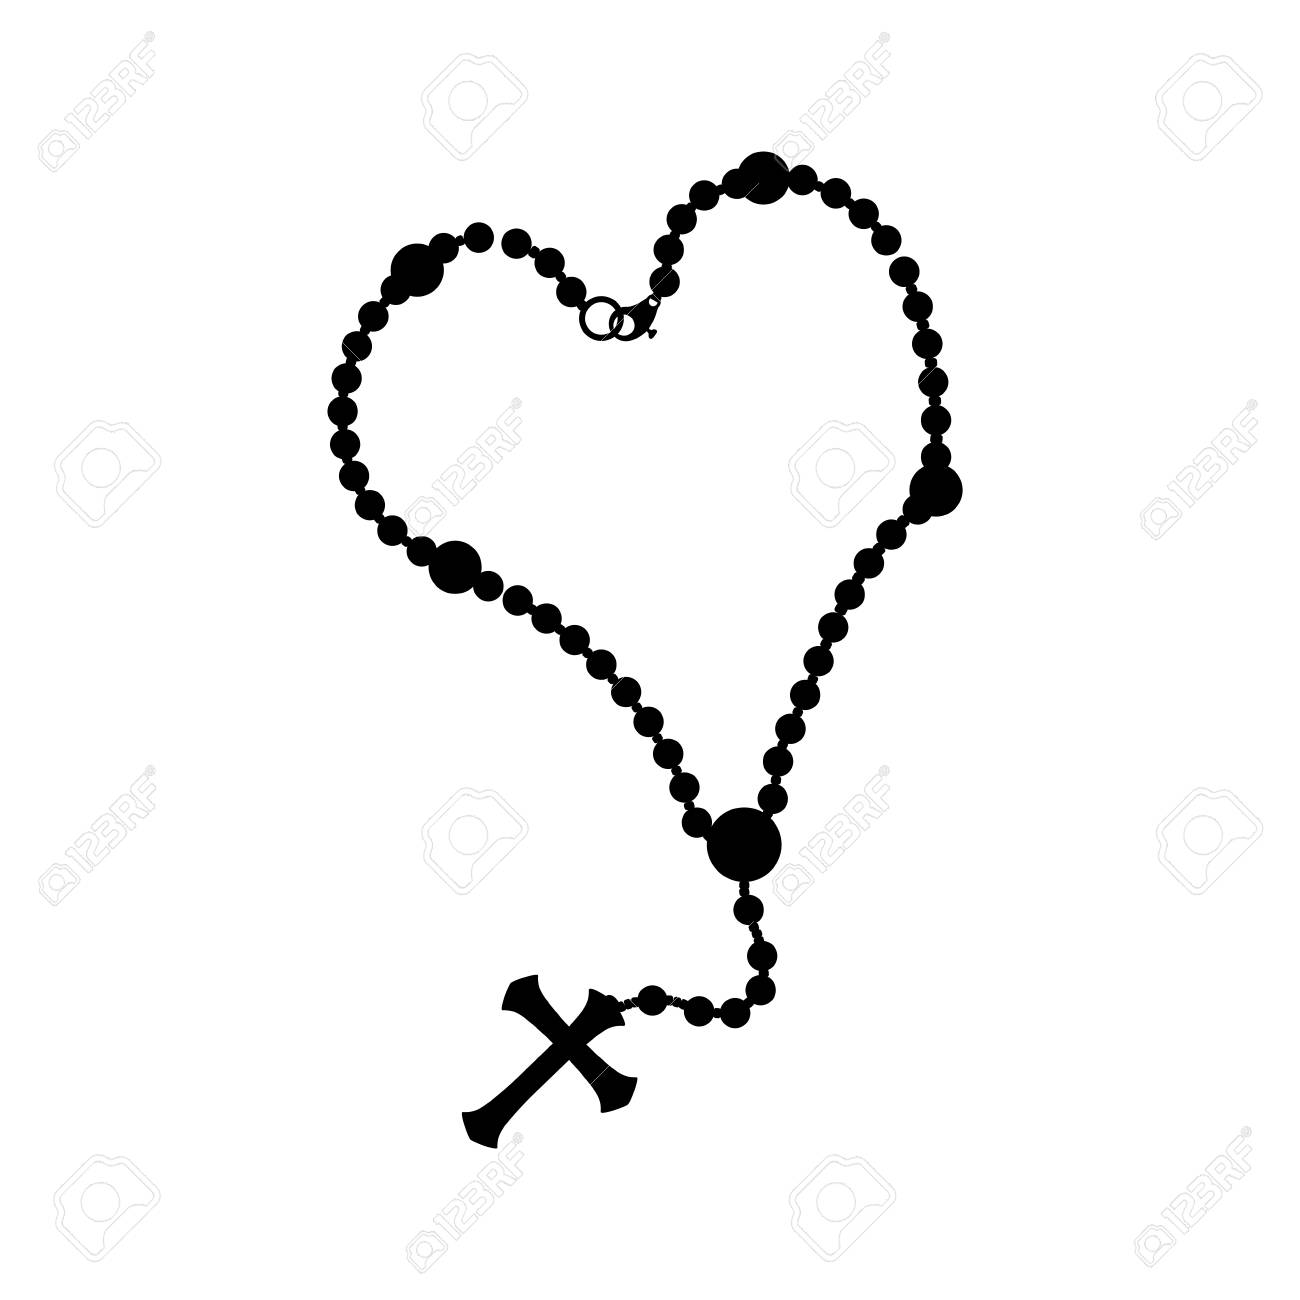 Rosary catholic faith icon vector illustration graphic design.